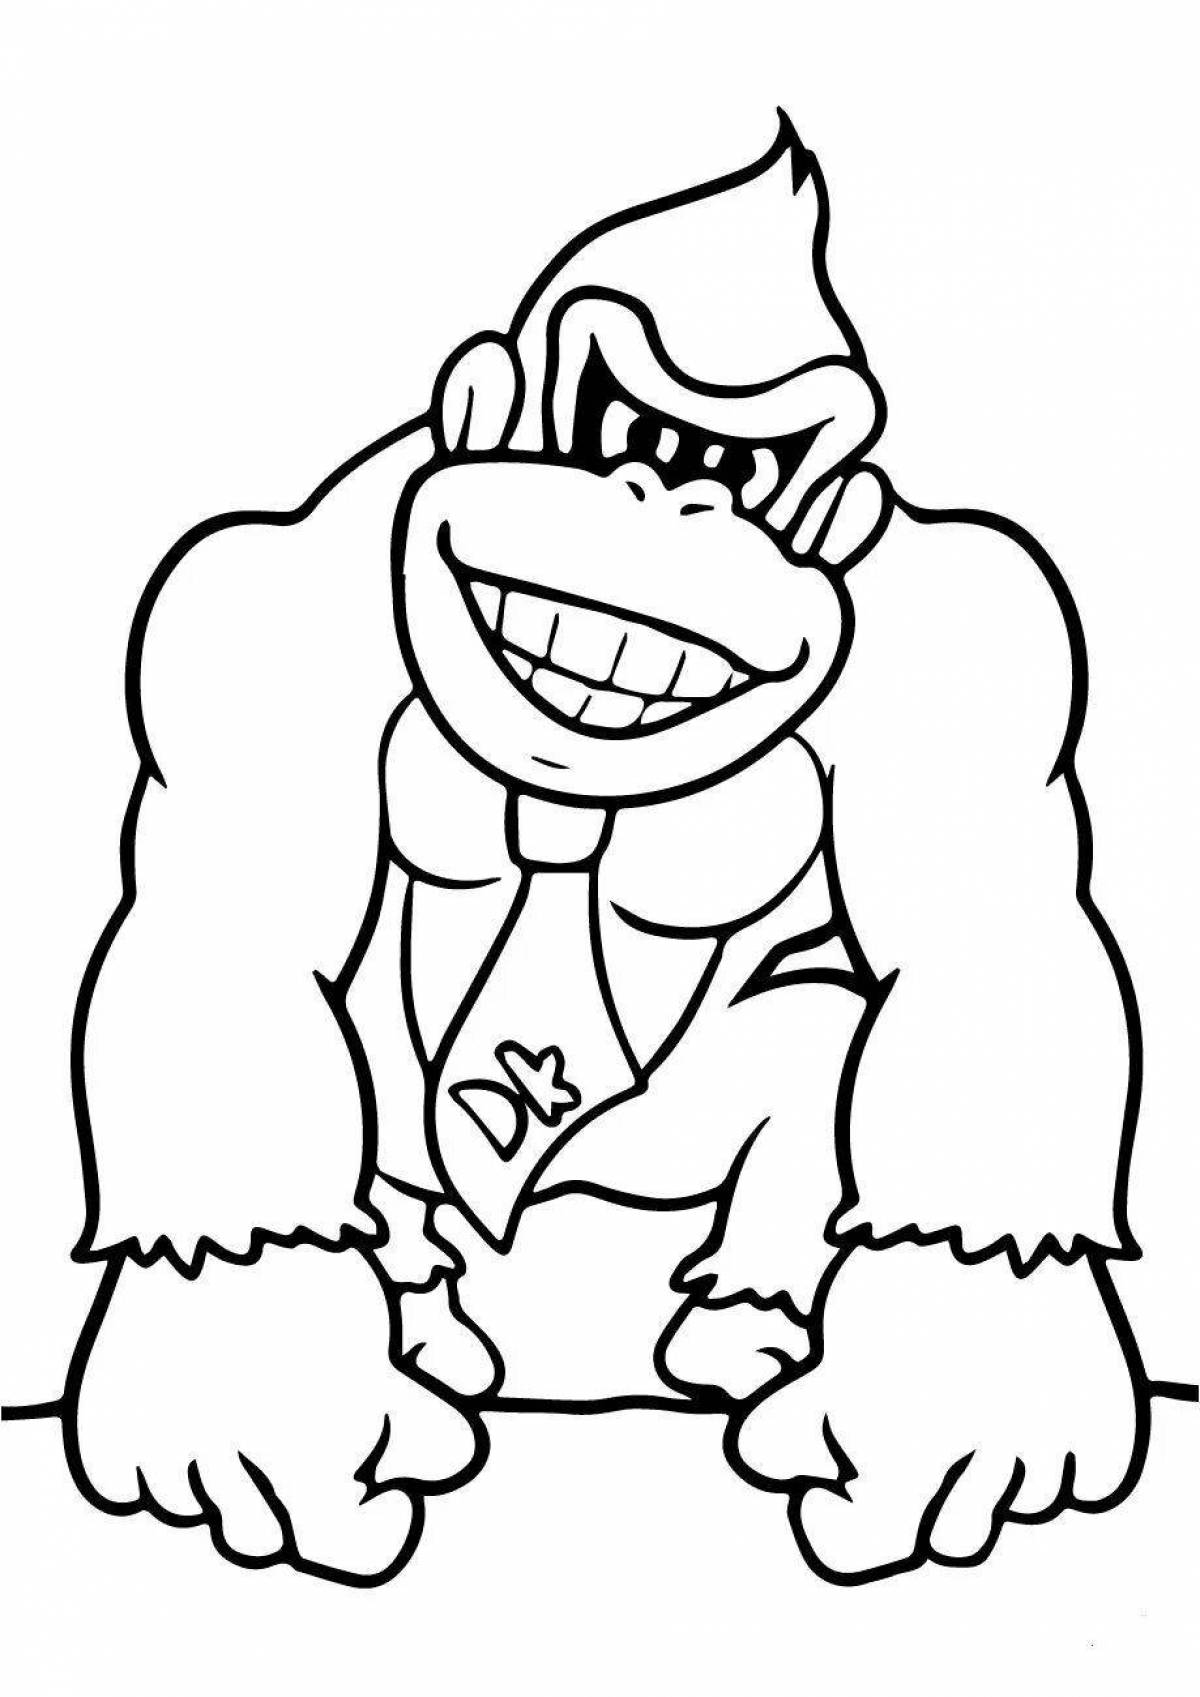 Animated kong monkey king coloring page